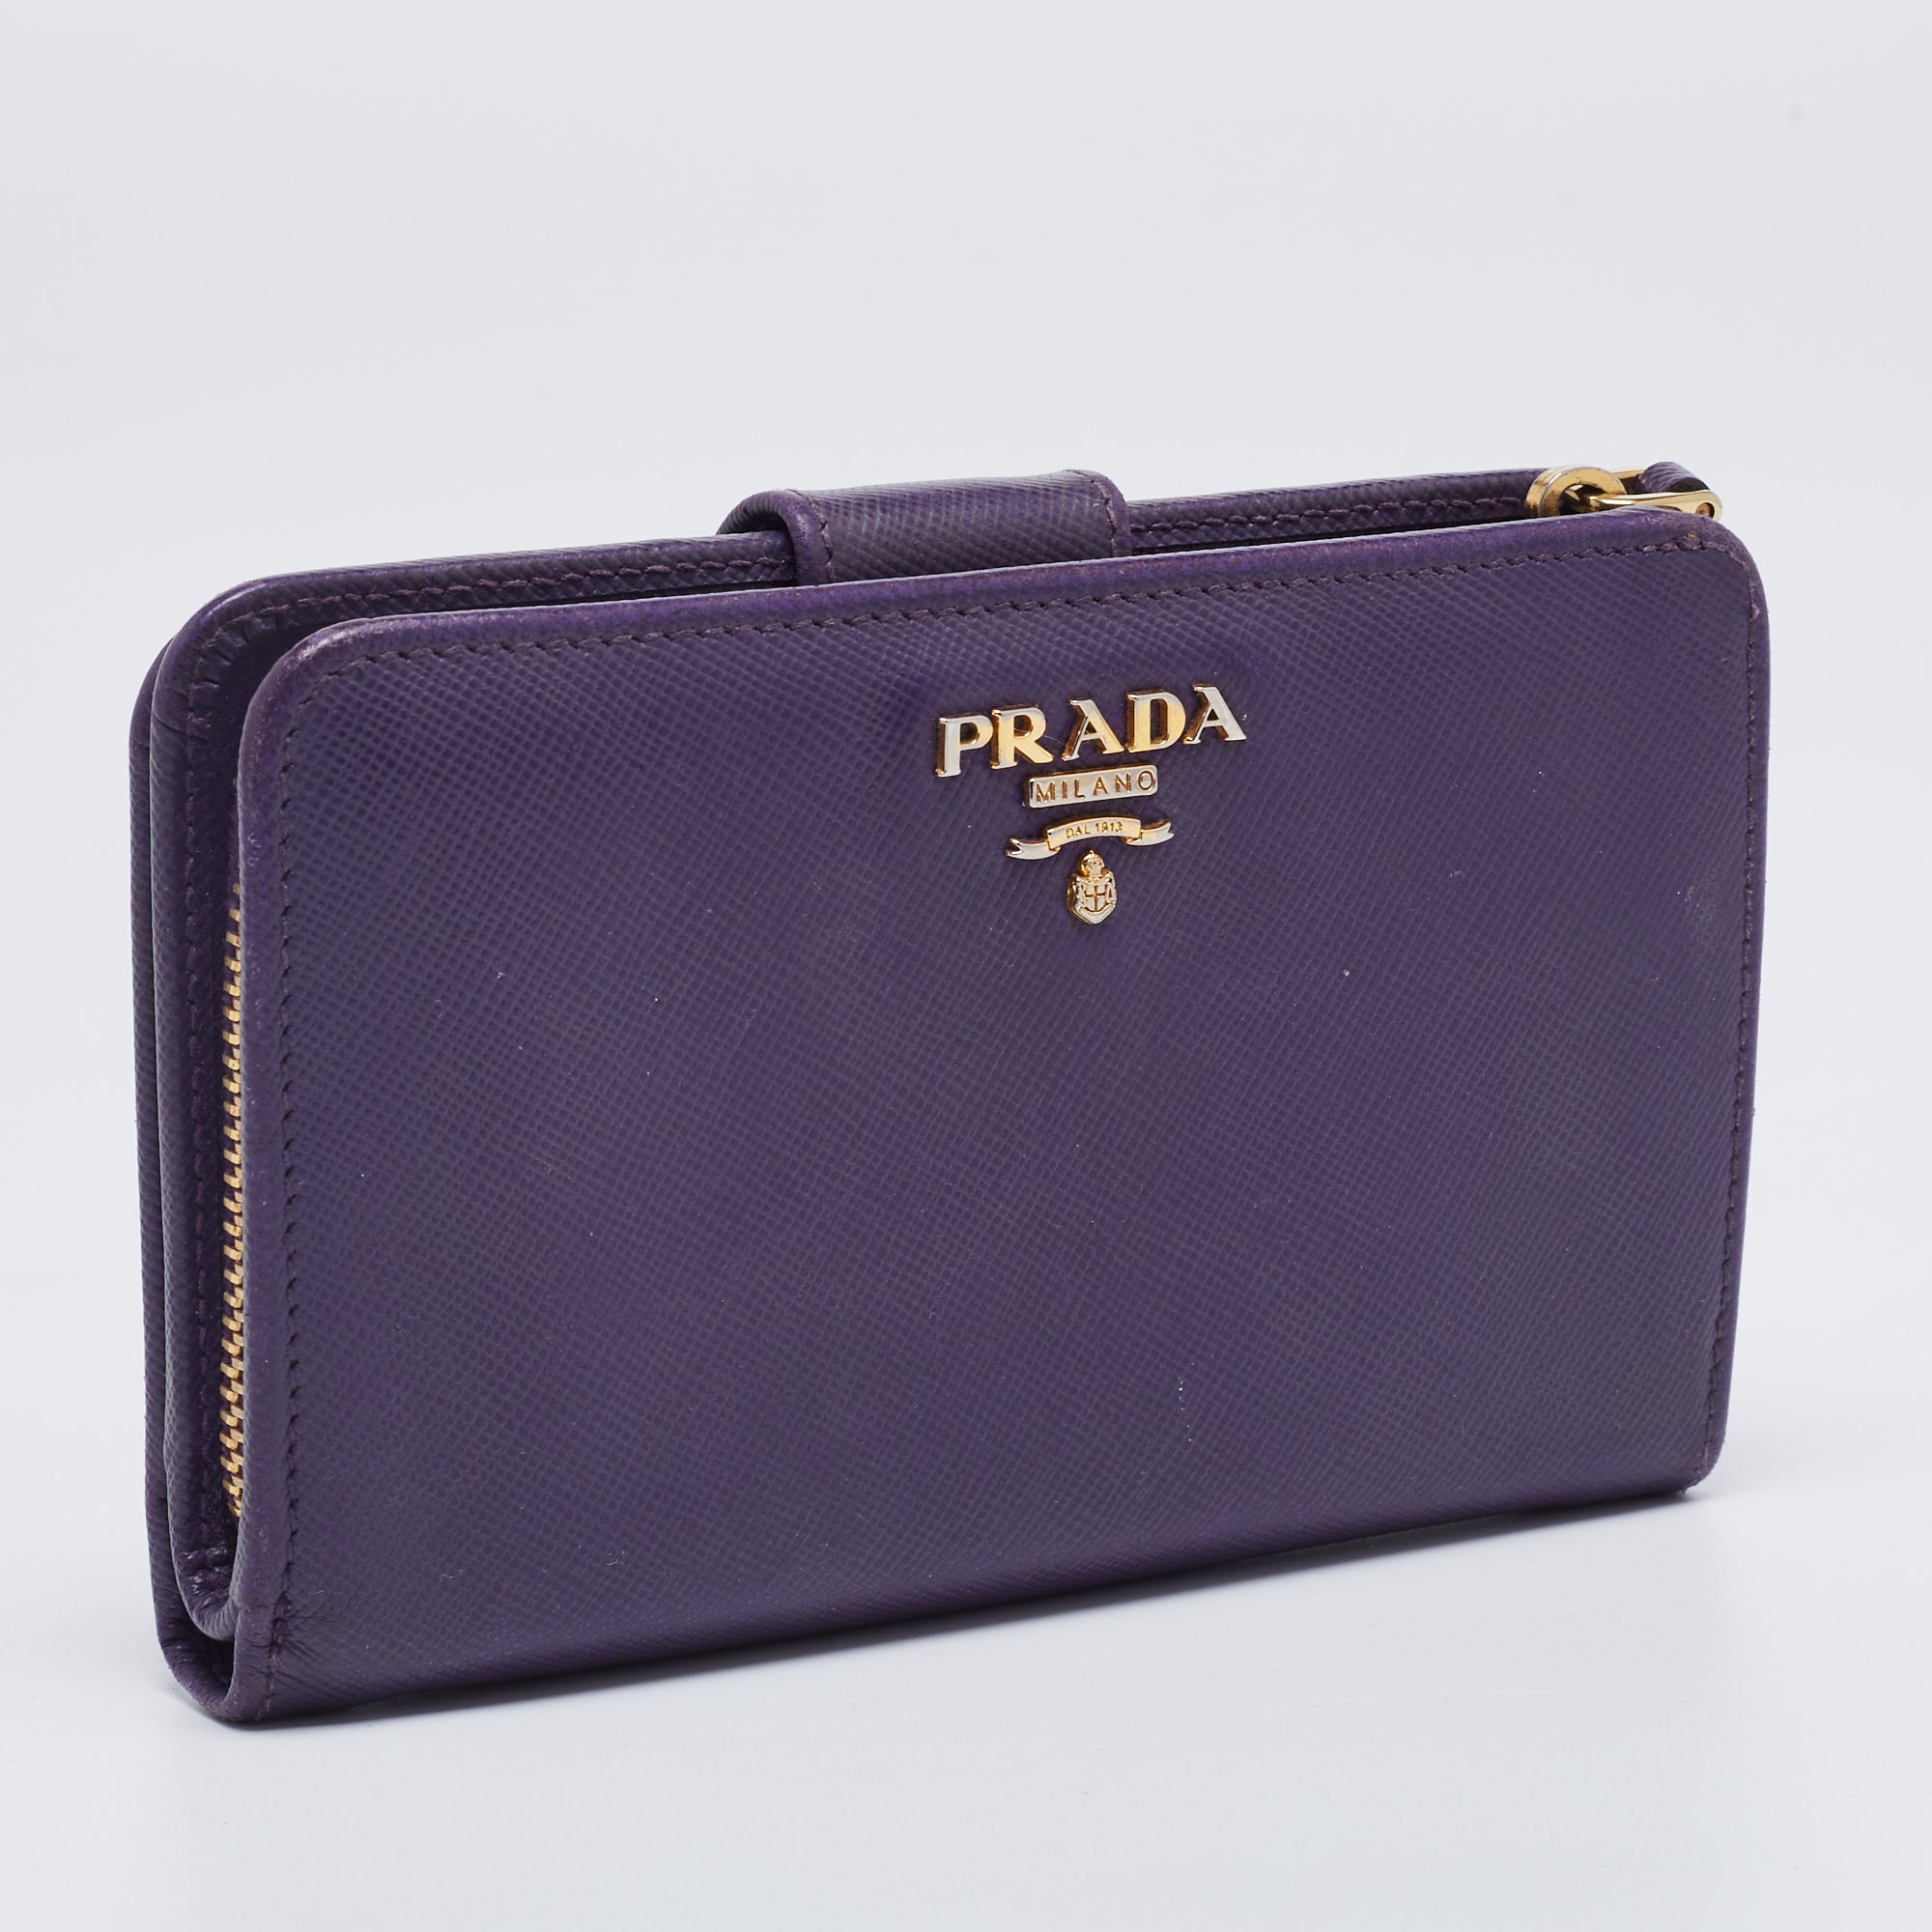 Authentic Prada Logo flower clutch bag, wallet,... - Depop